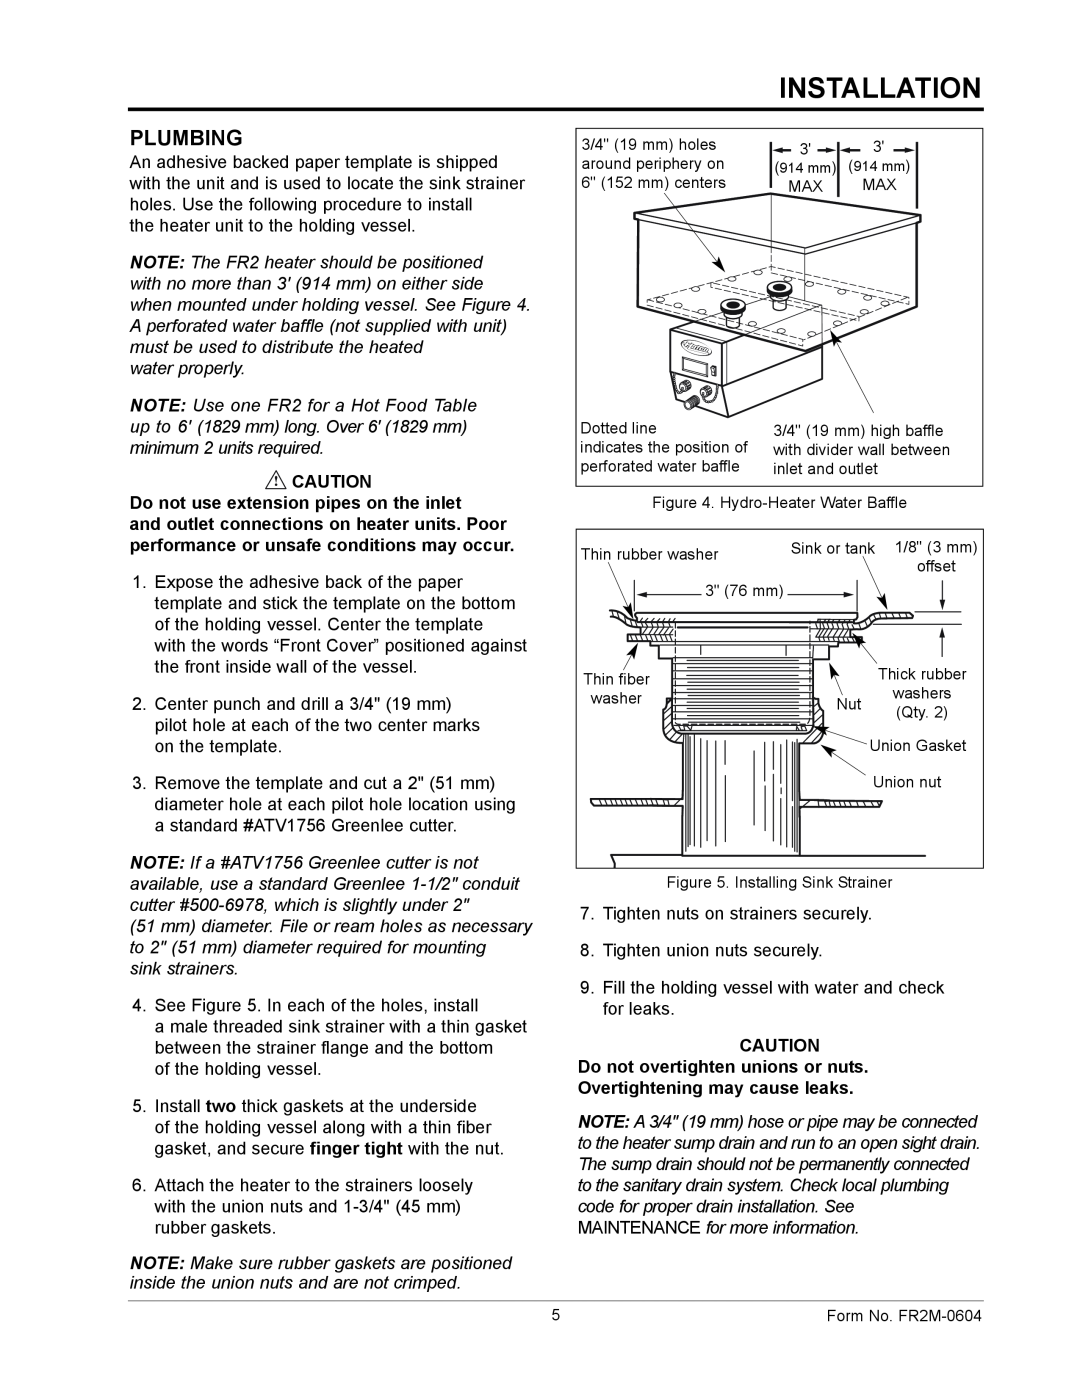 Hatco FR2 Series manual Installation, Plumbing 